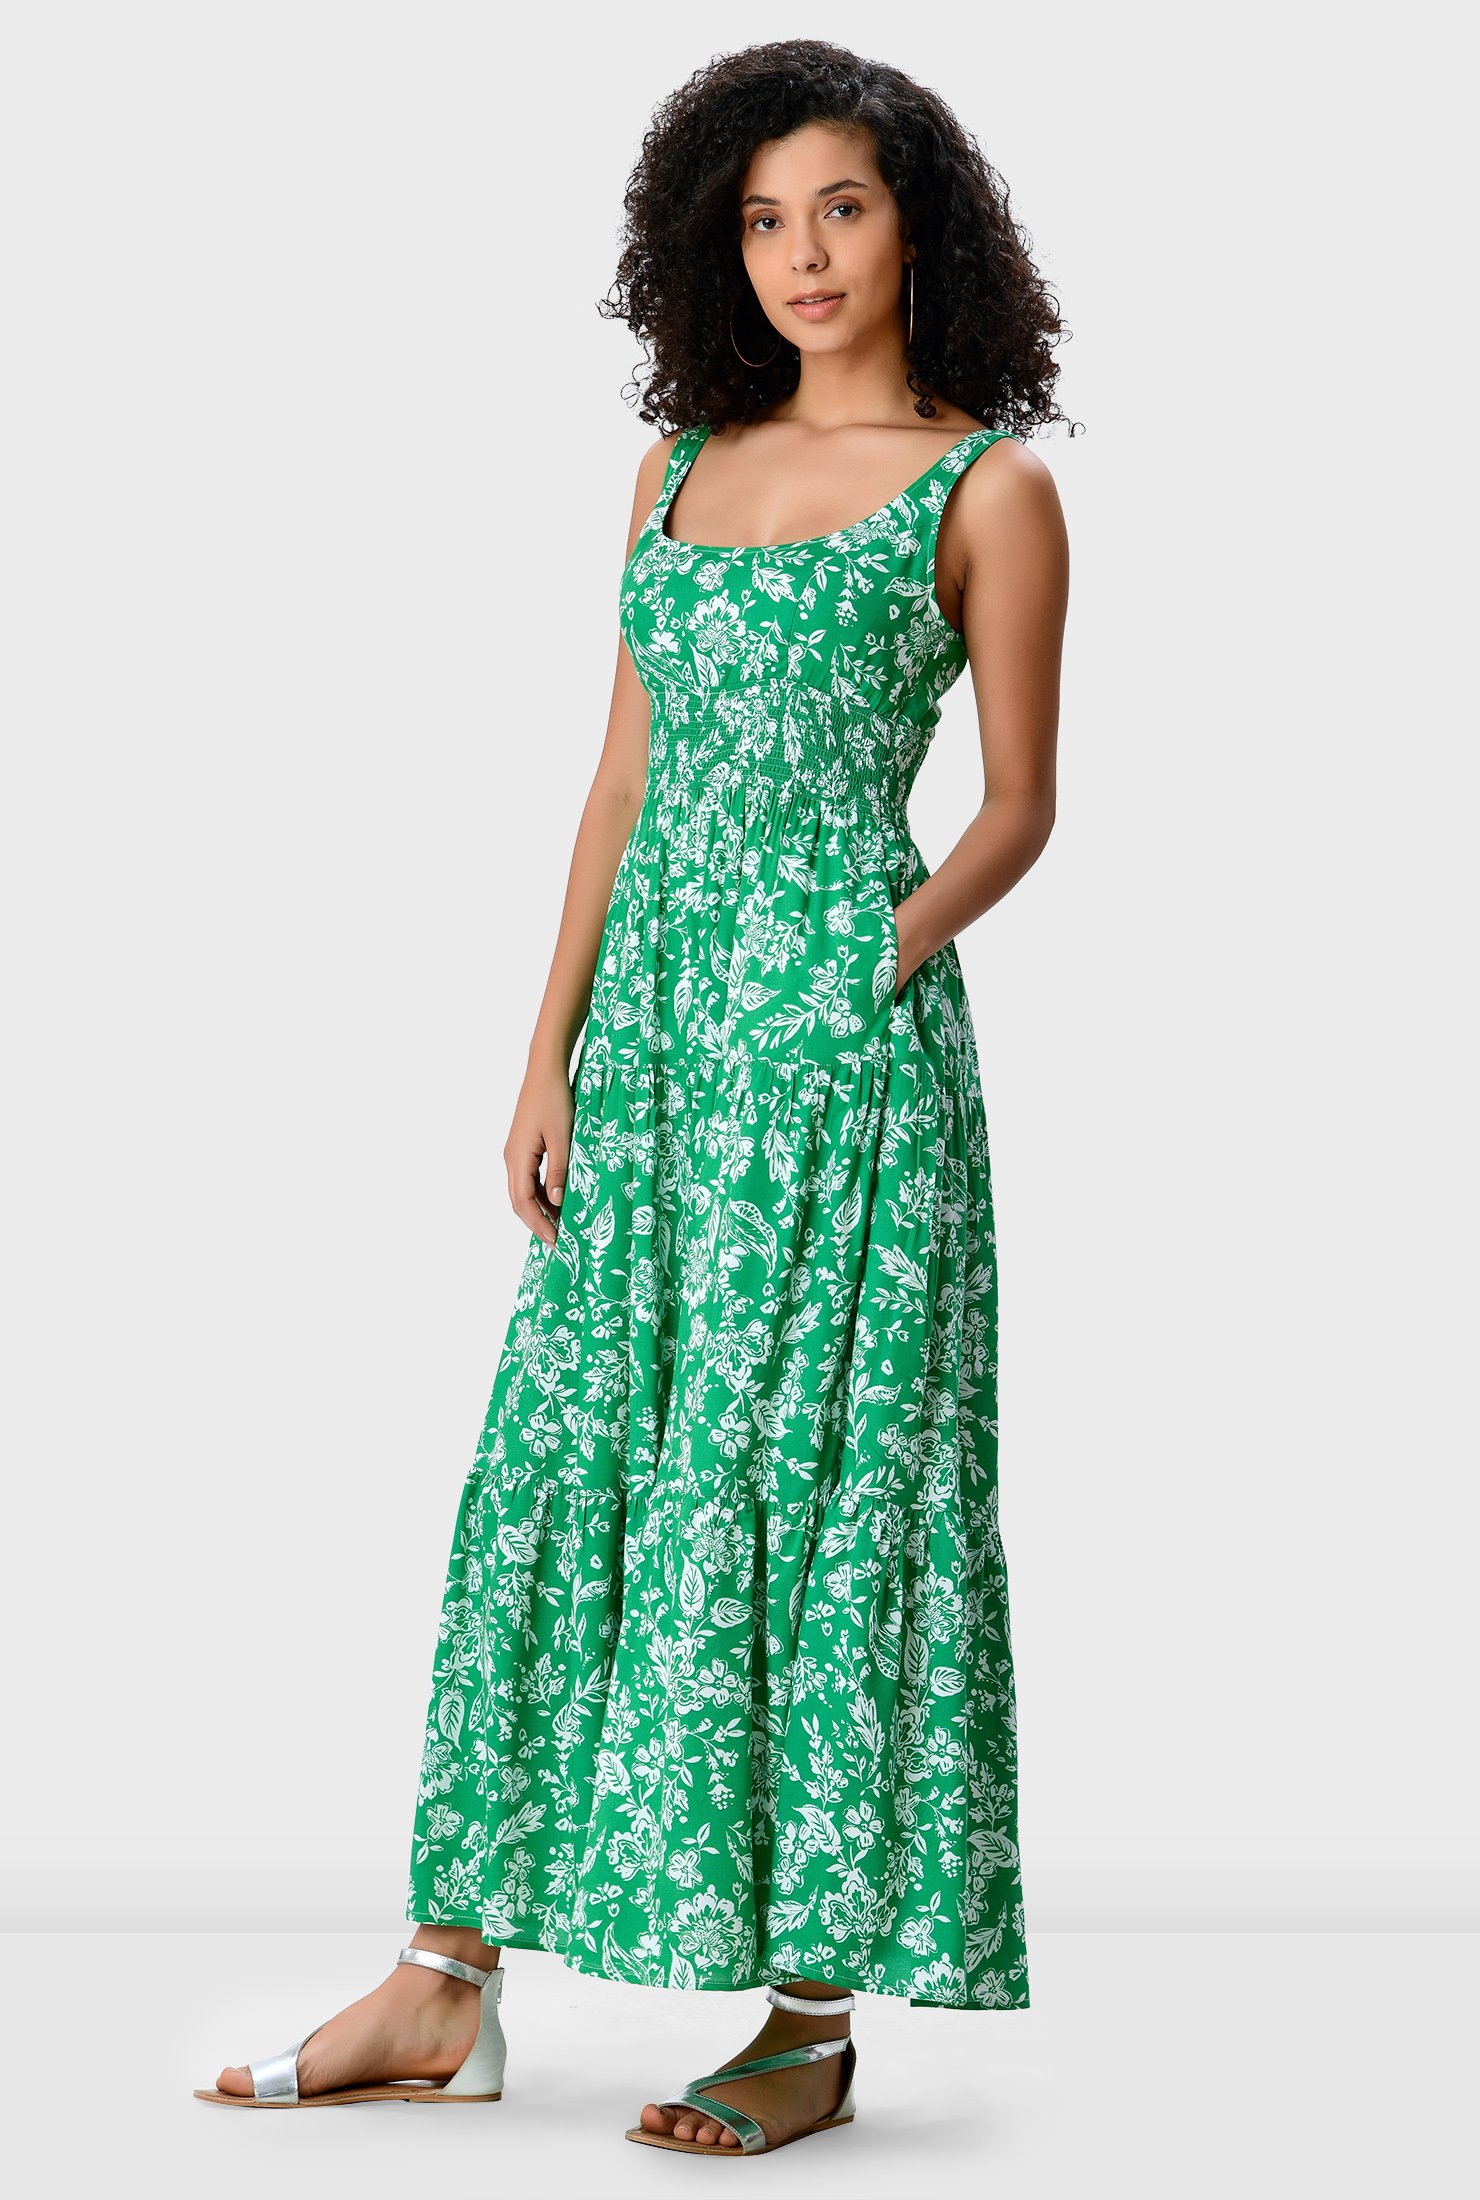 Shop Smocked empire floral print tiered dress | eShakti